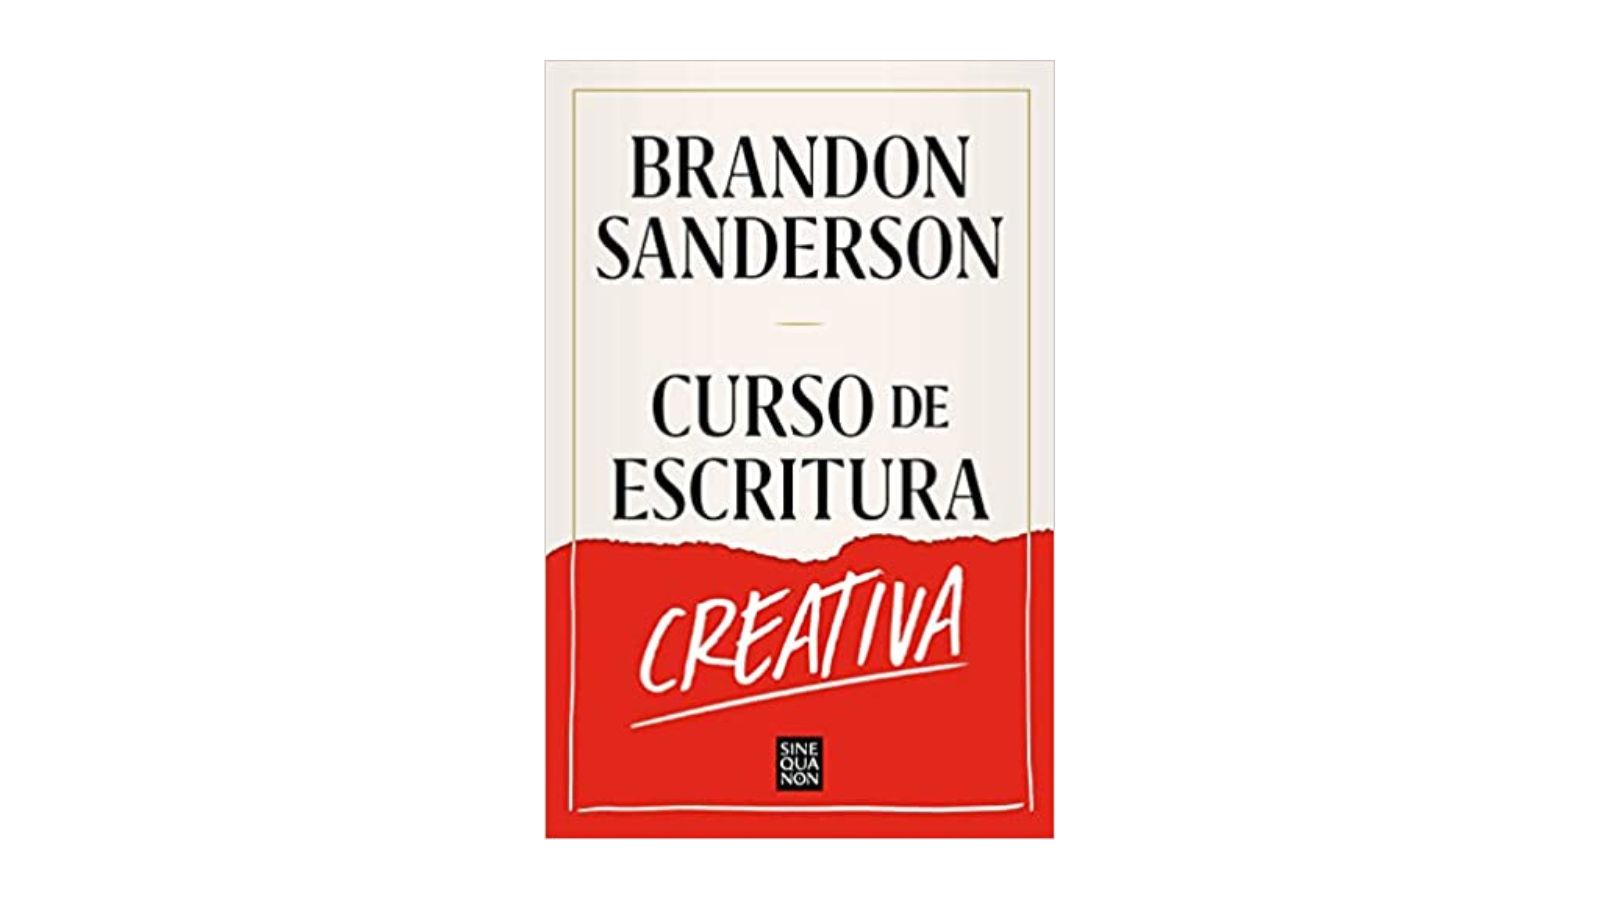 Reseña de Curso de escritura creativa. Brandon Sanderson.